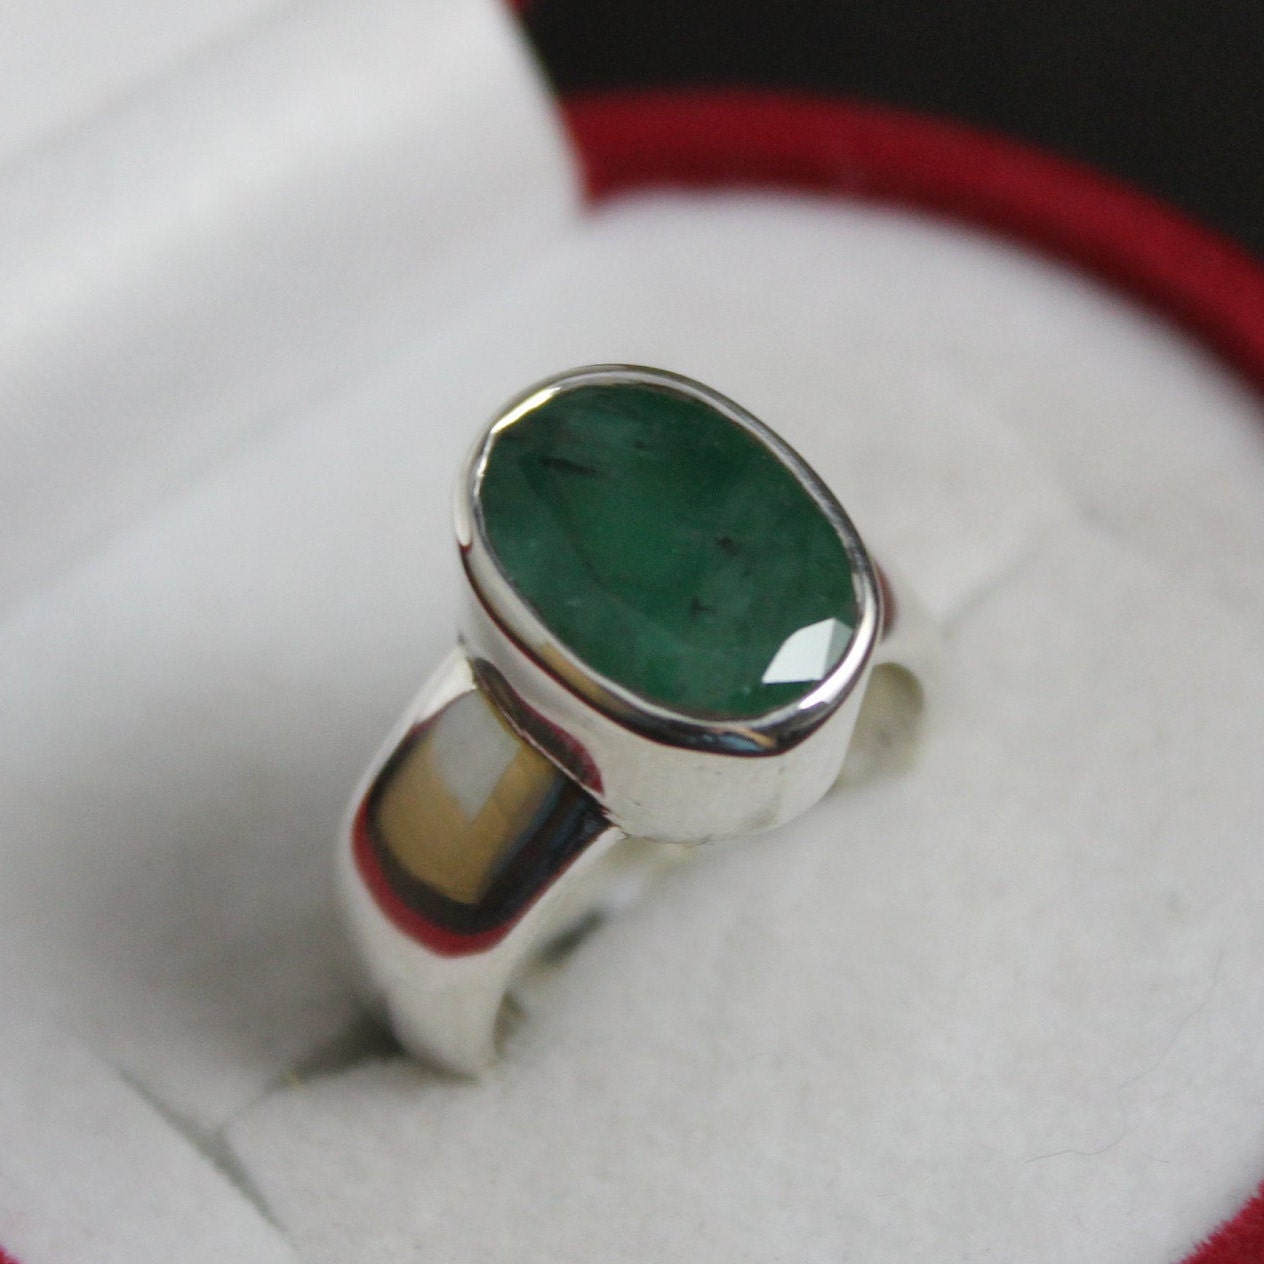 Buy Green Emerald (Panna) Rings Online at Best Price | GemPundit